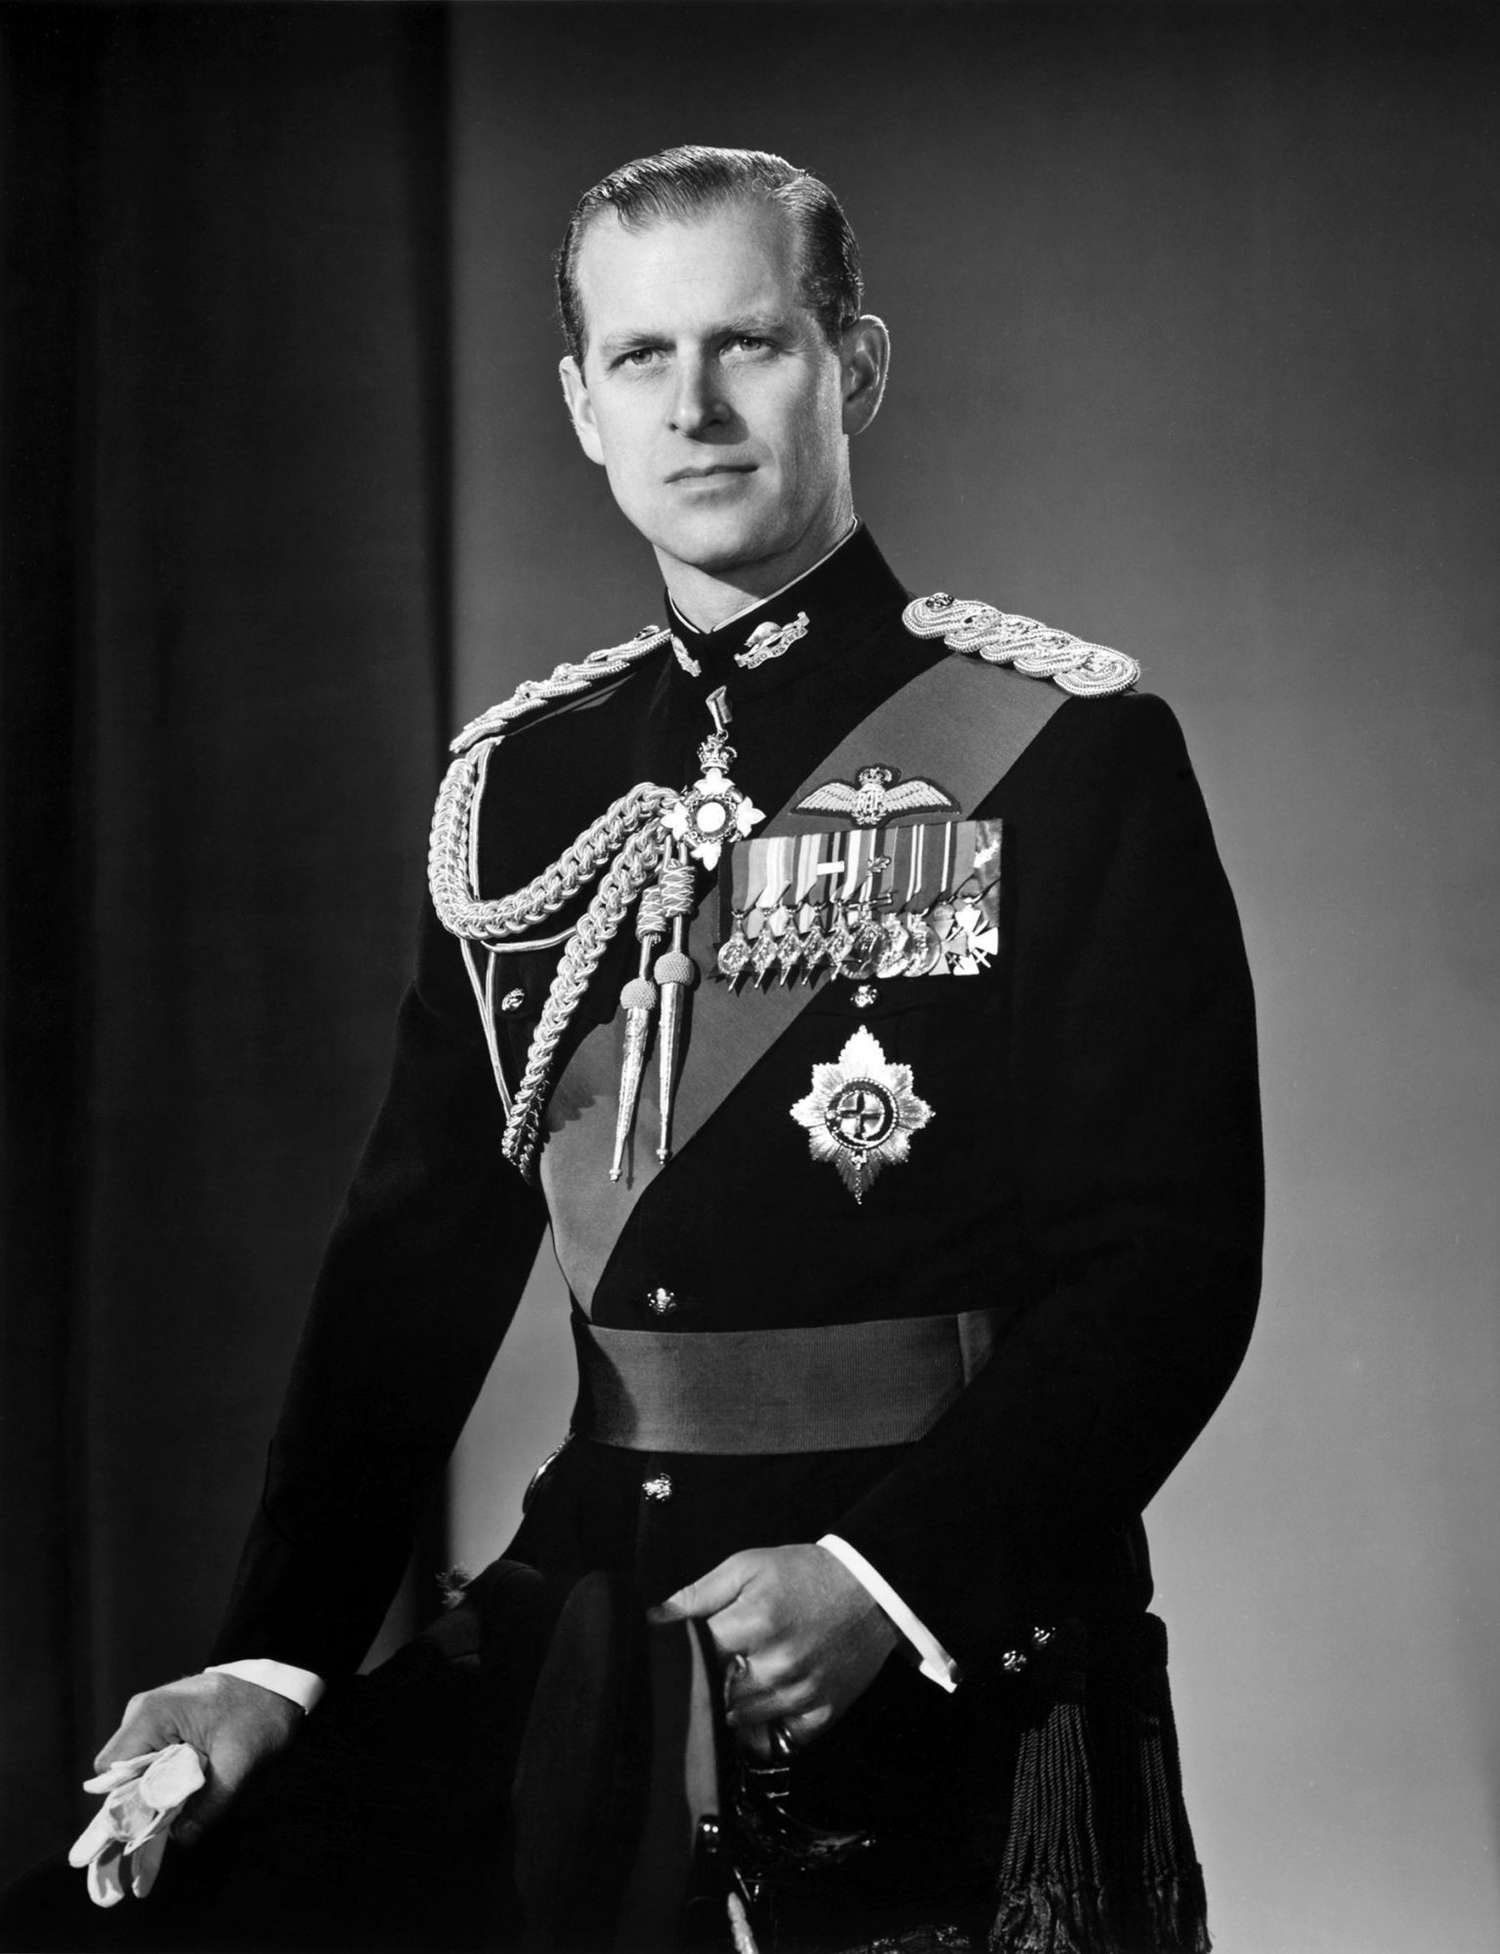 The Duke of Edinburgh Portrait